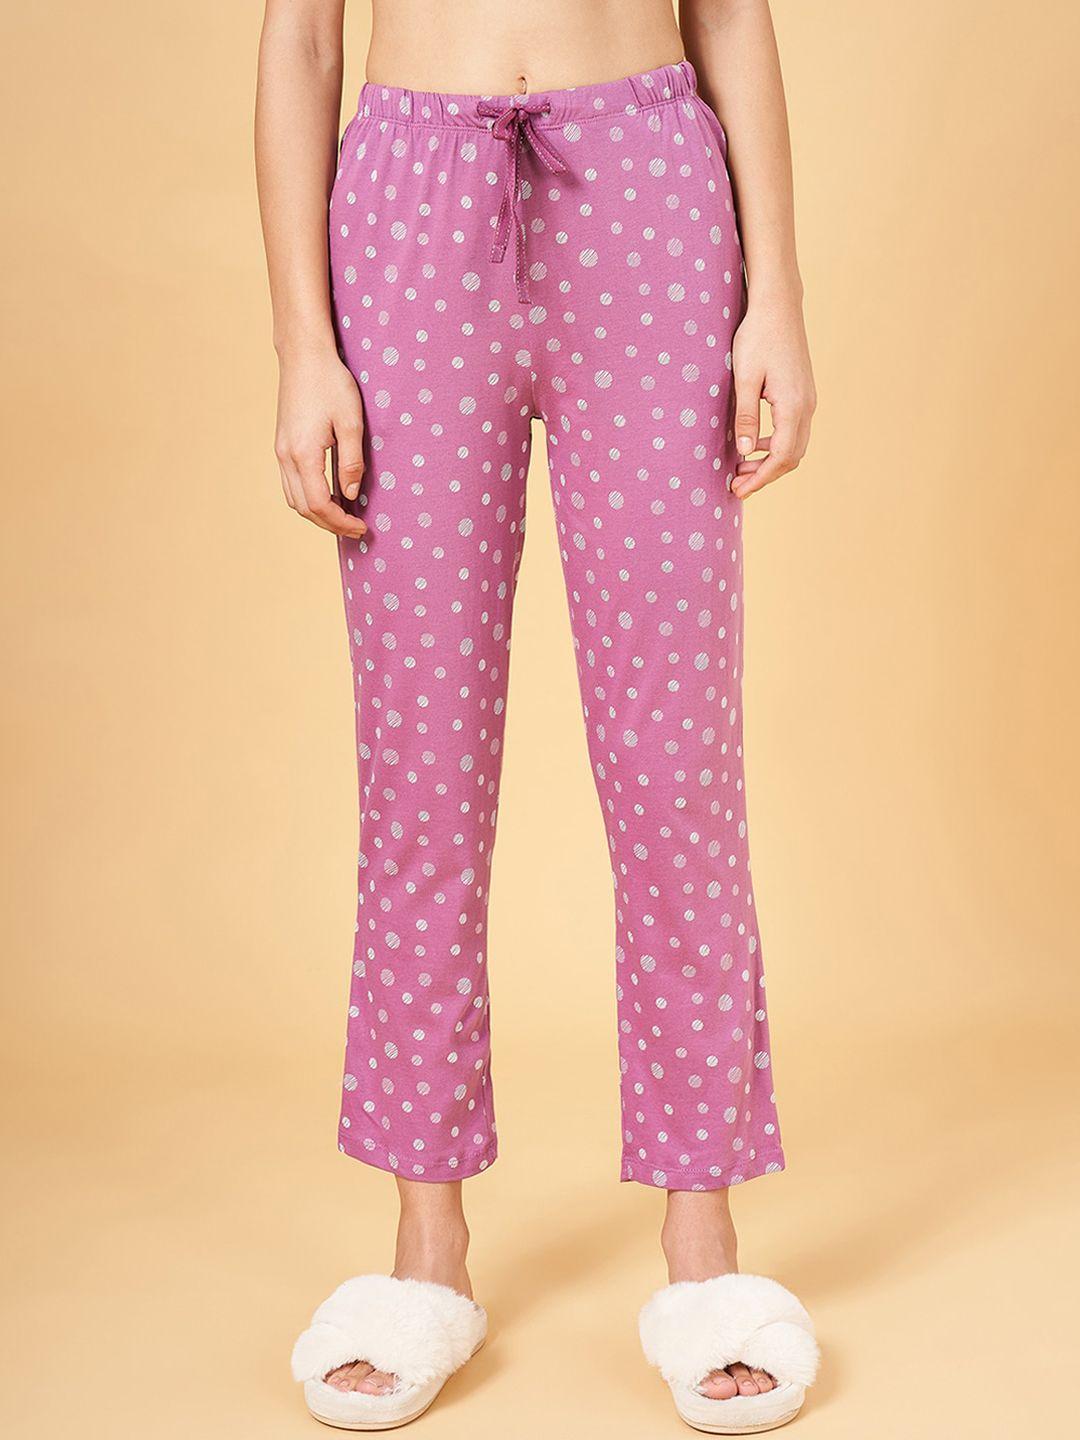 dreamz by pantaloons women polka dots printed cotton straight lounge pants